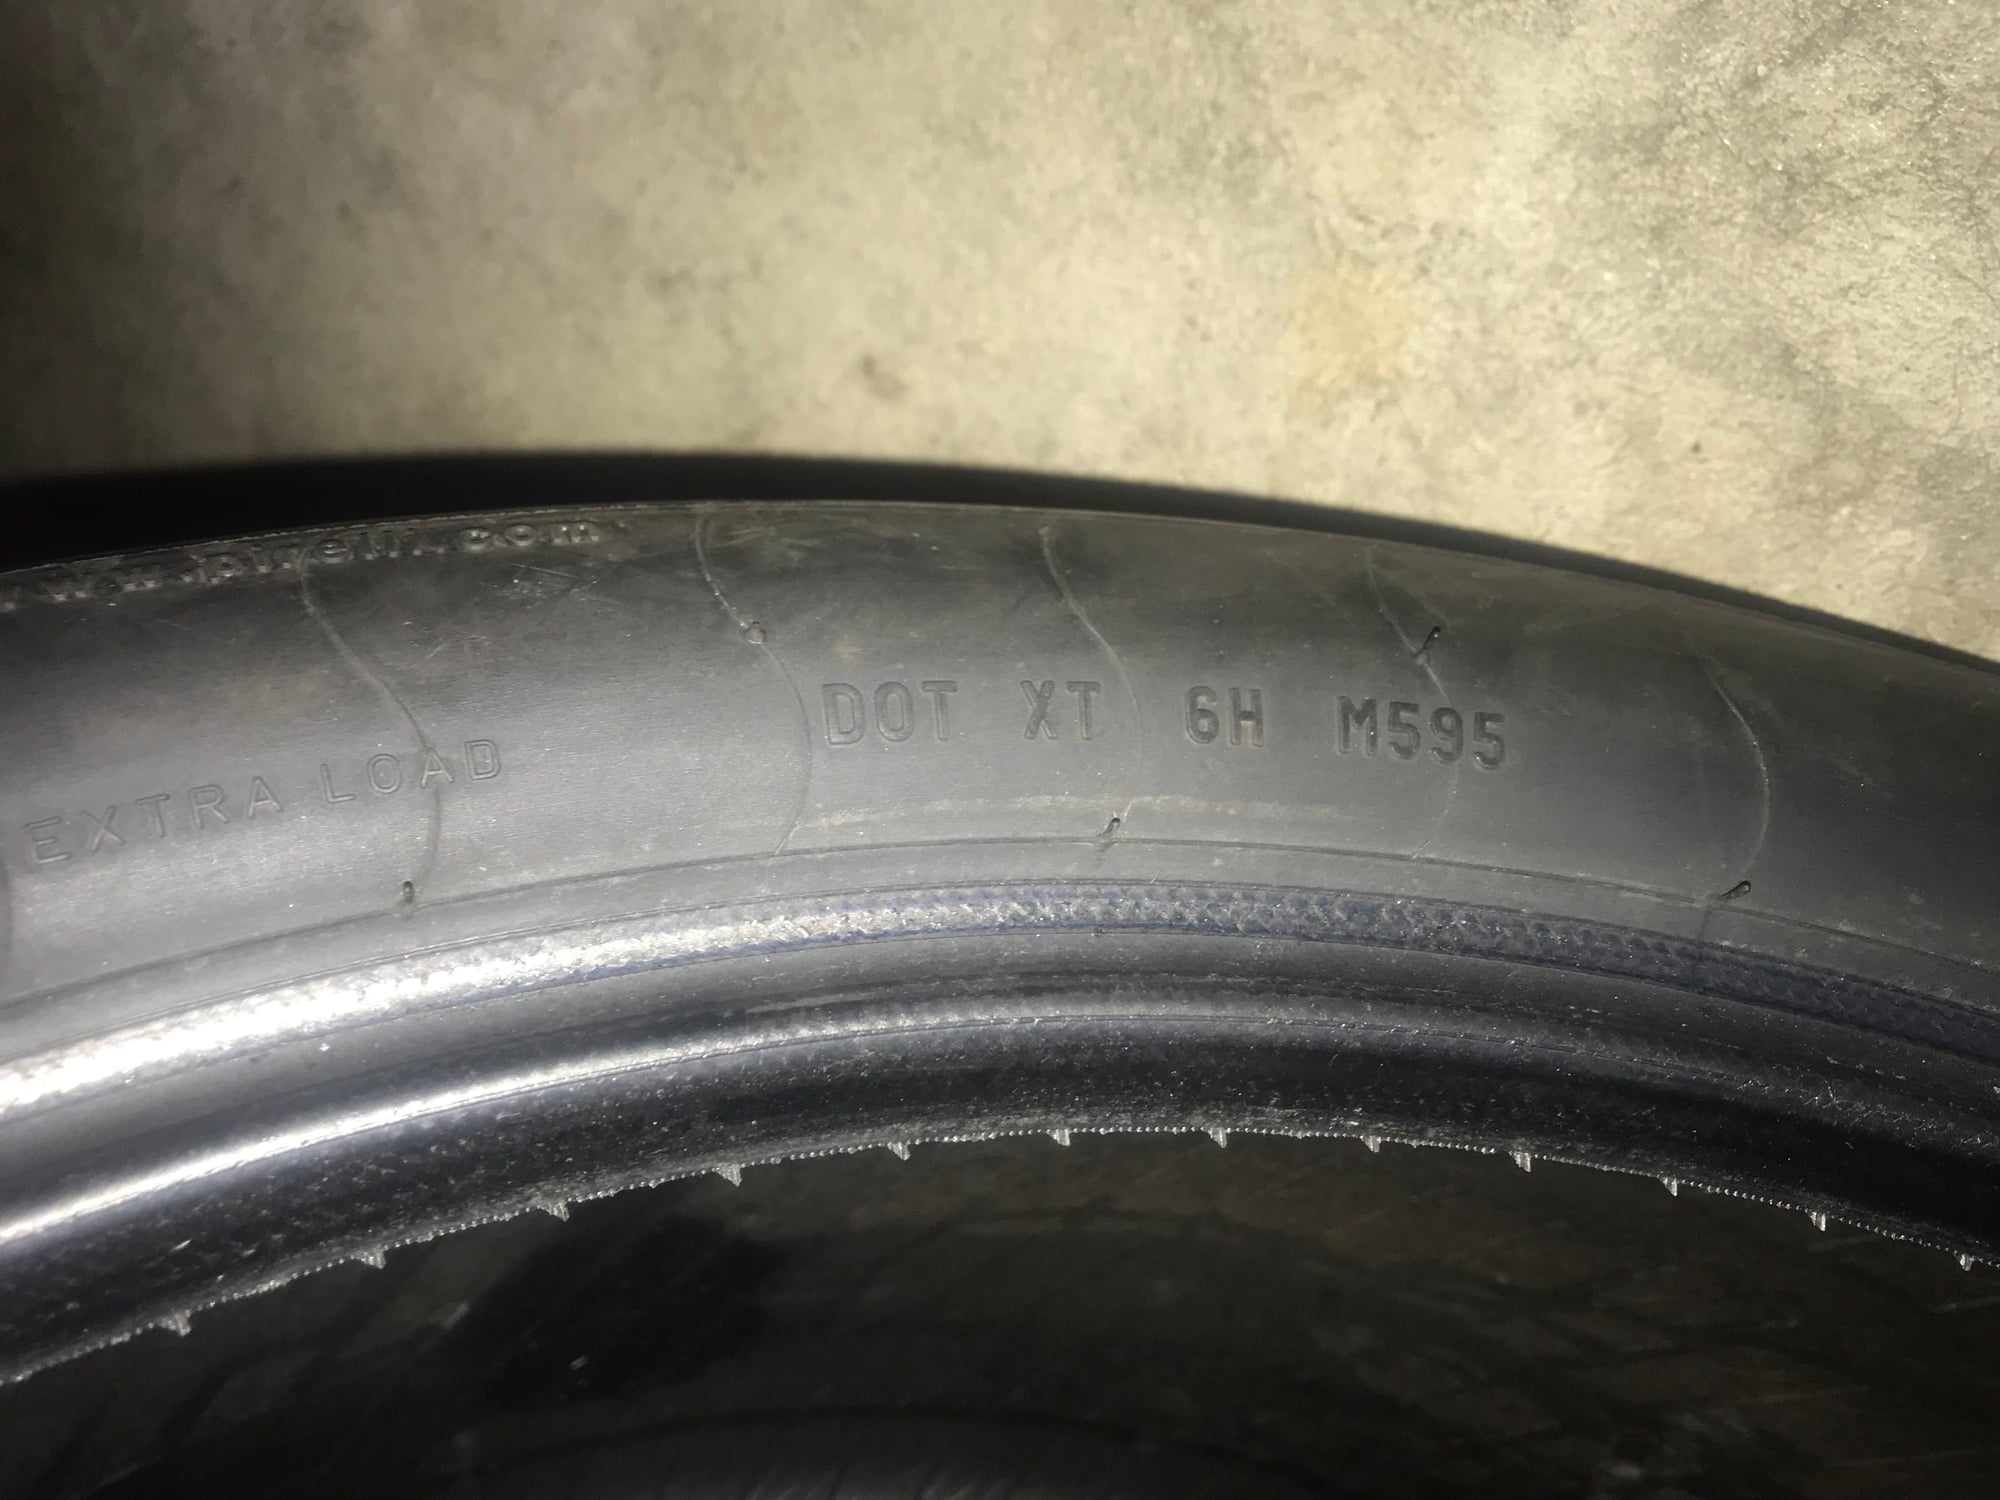 Wheels and Tires/Axles - OEM Porsche 911 Turbo S Tires(Pirelli P-Zero) - Used - 2014 Porsche 911 - Egg Harbor Township, NJ 08234, United States